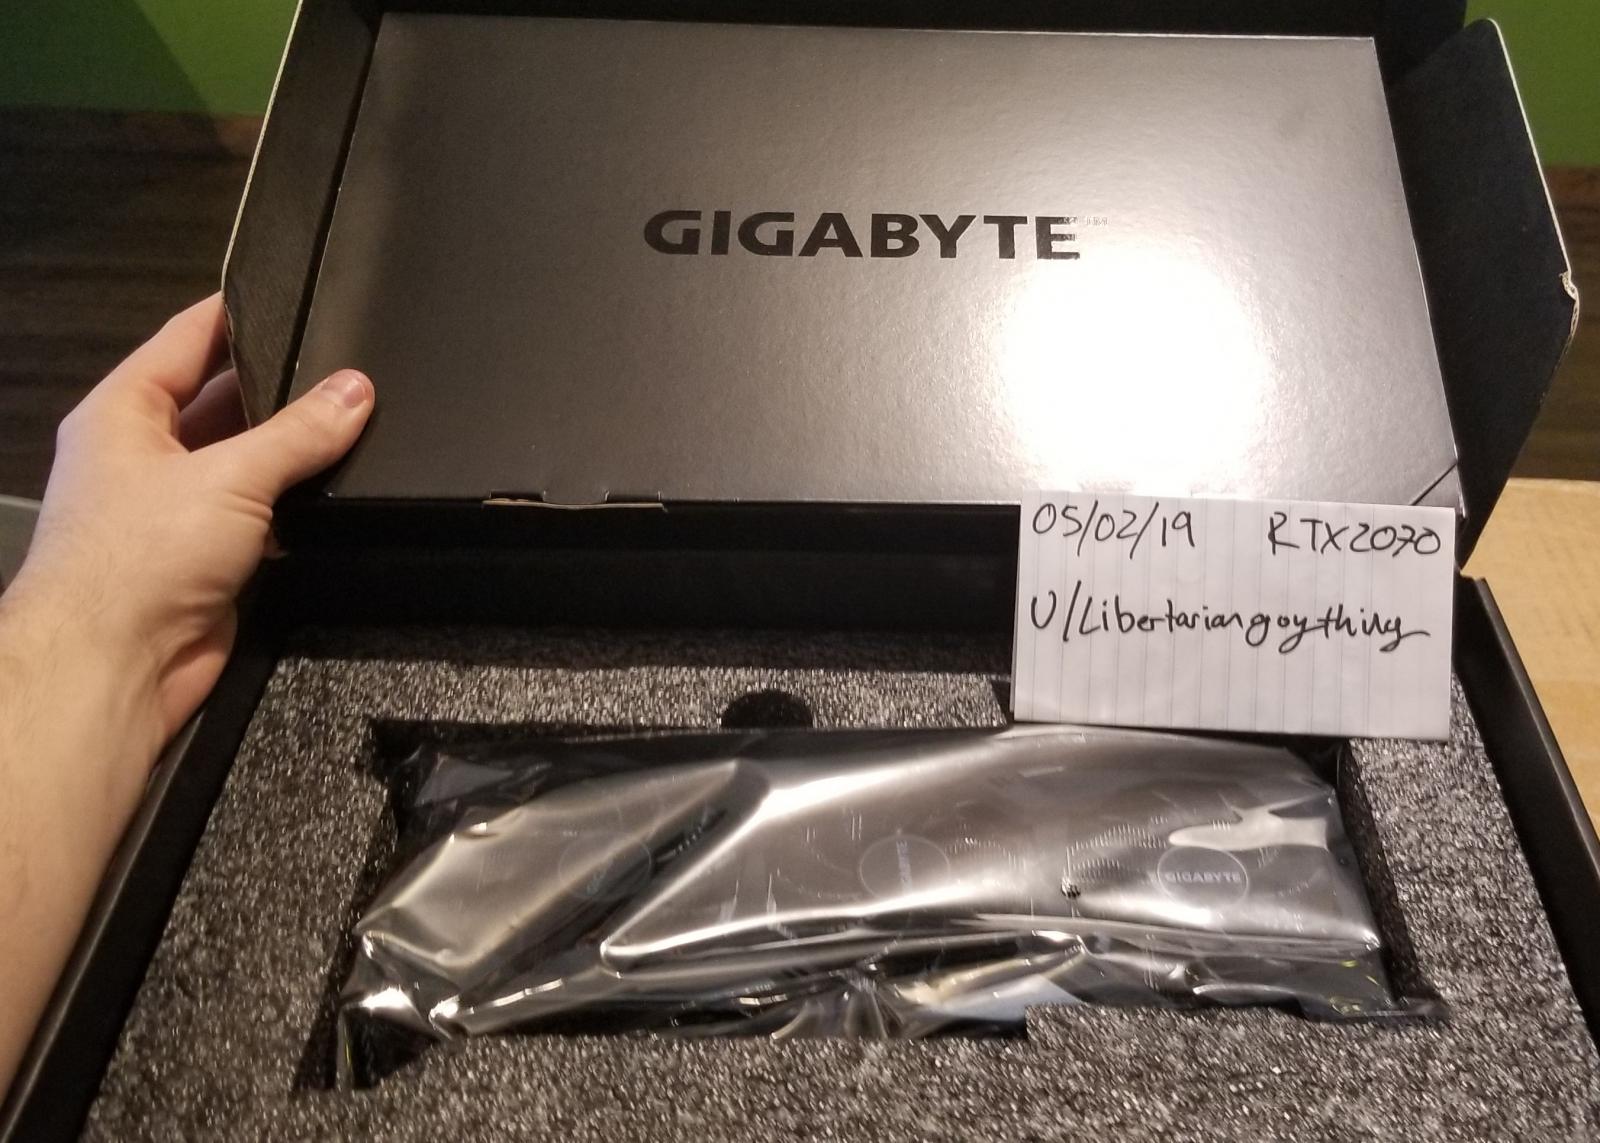 For sale Gigabyte RTX 2070 Gaming OC 8GB